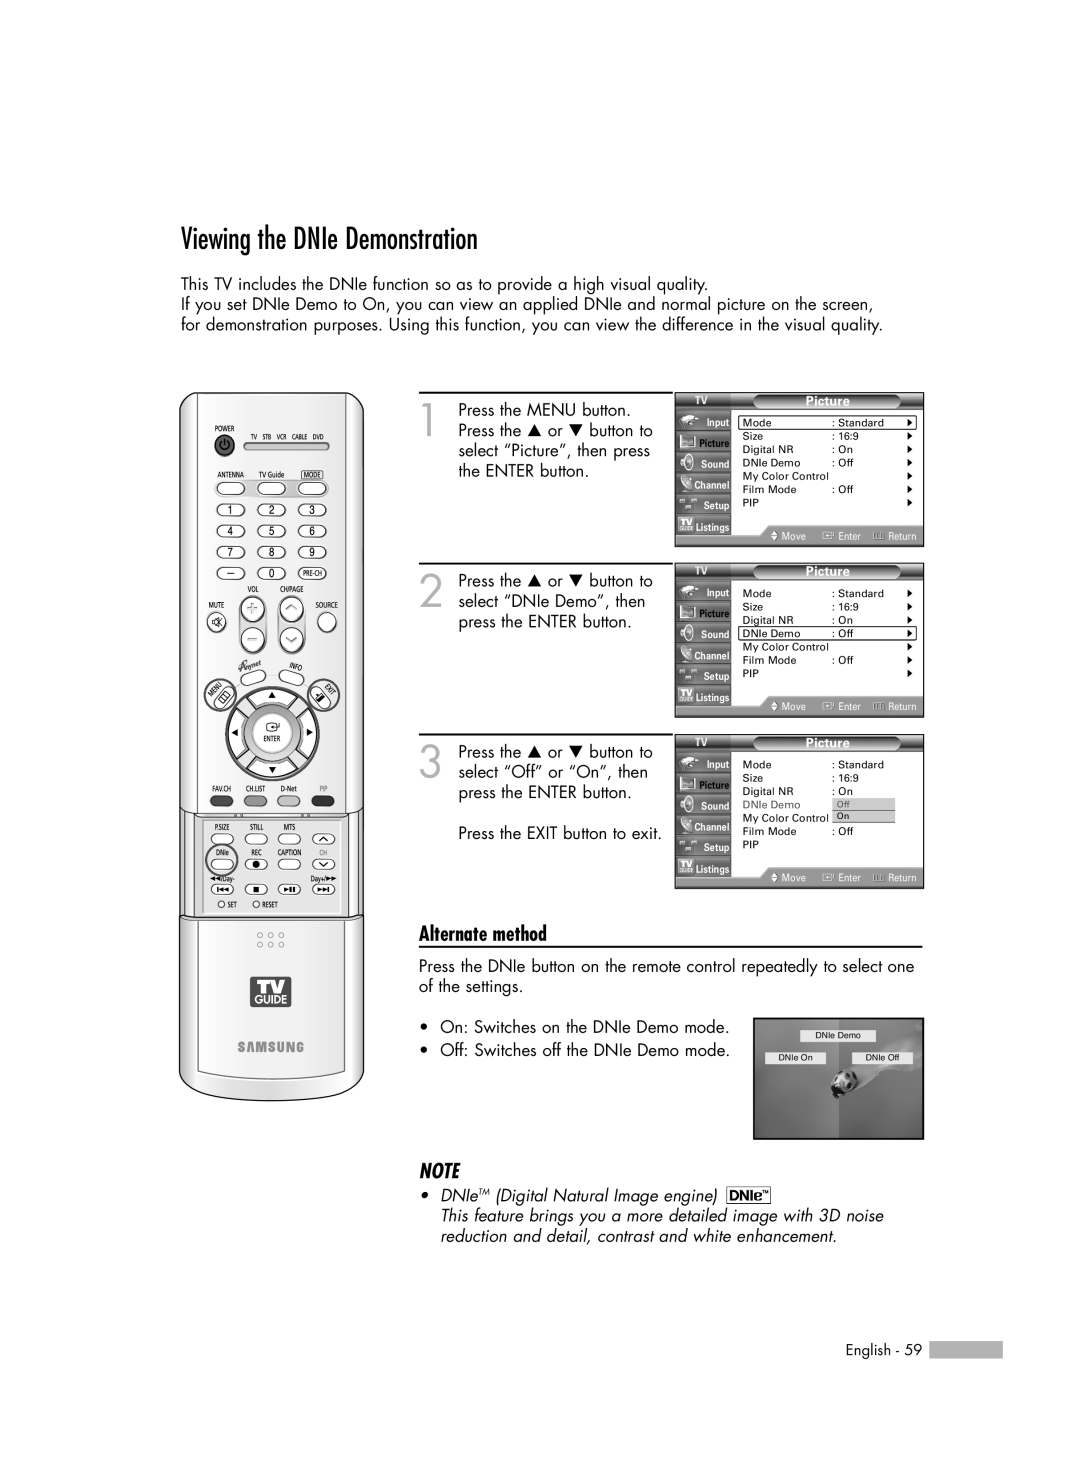 Samsung HL-R5688W manual Viewing the DNIe Demonstration, Alternate method, DNIeTM Digital Natural Image engine 